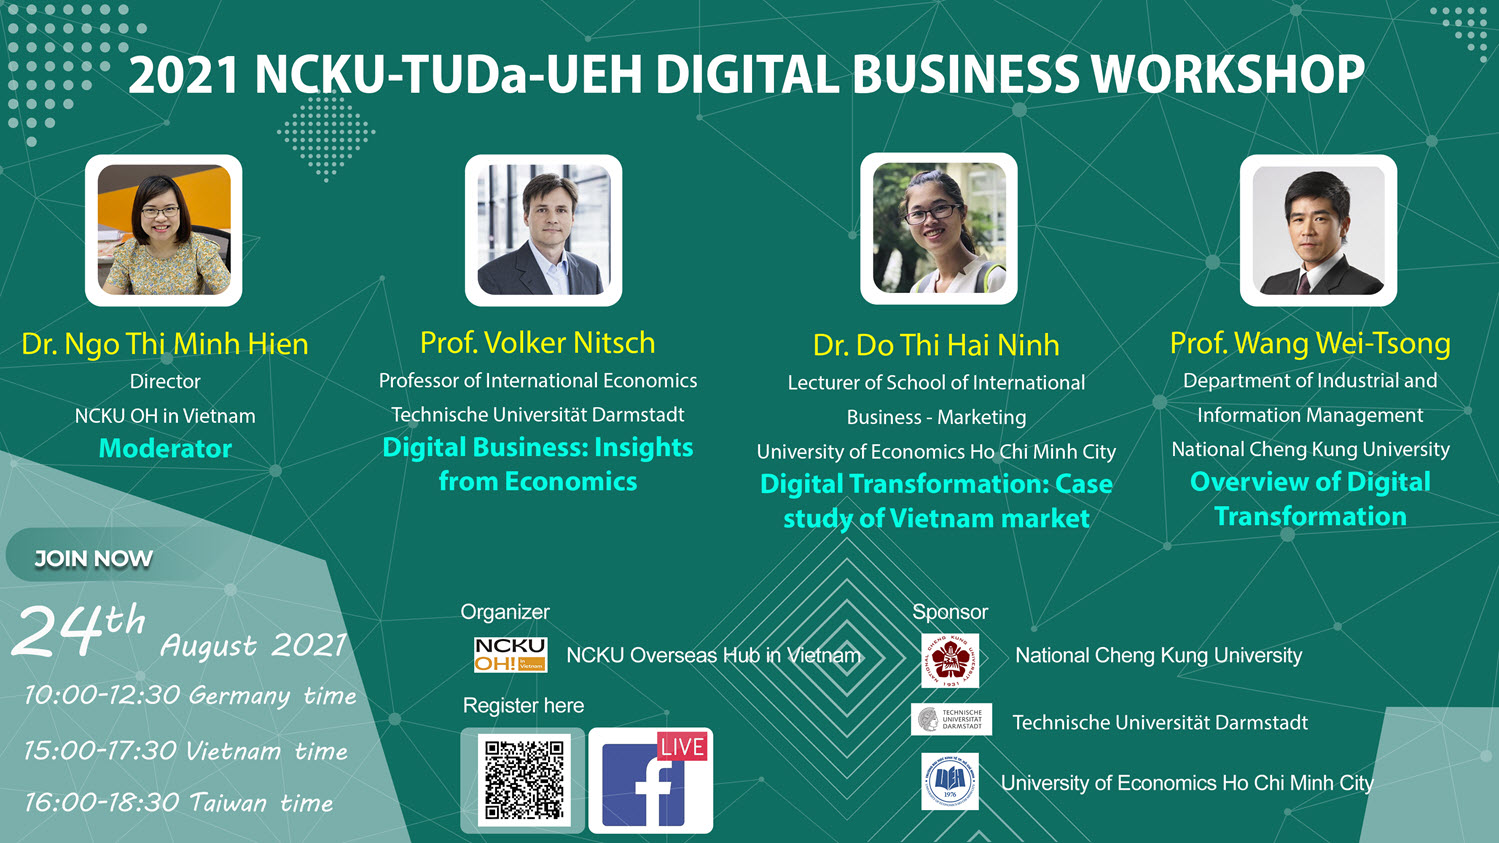 2021 NCKU-TUDa-UEH Digital Business Workshop TENTATIVE PROGRAM

